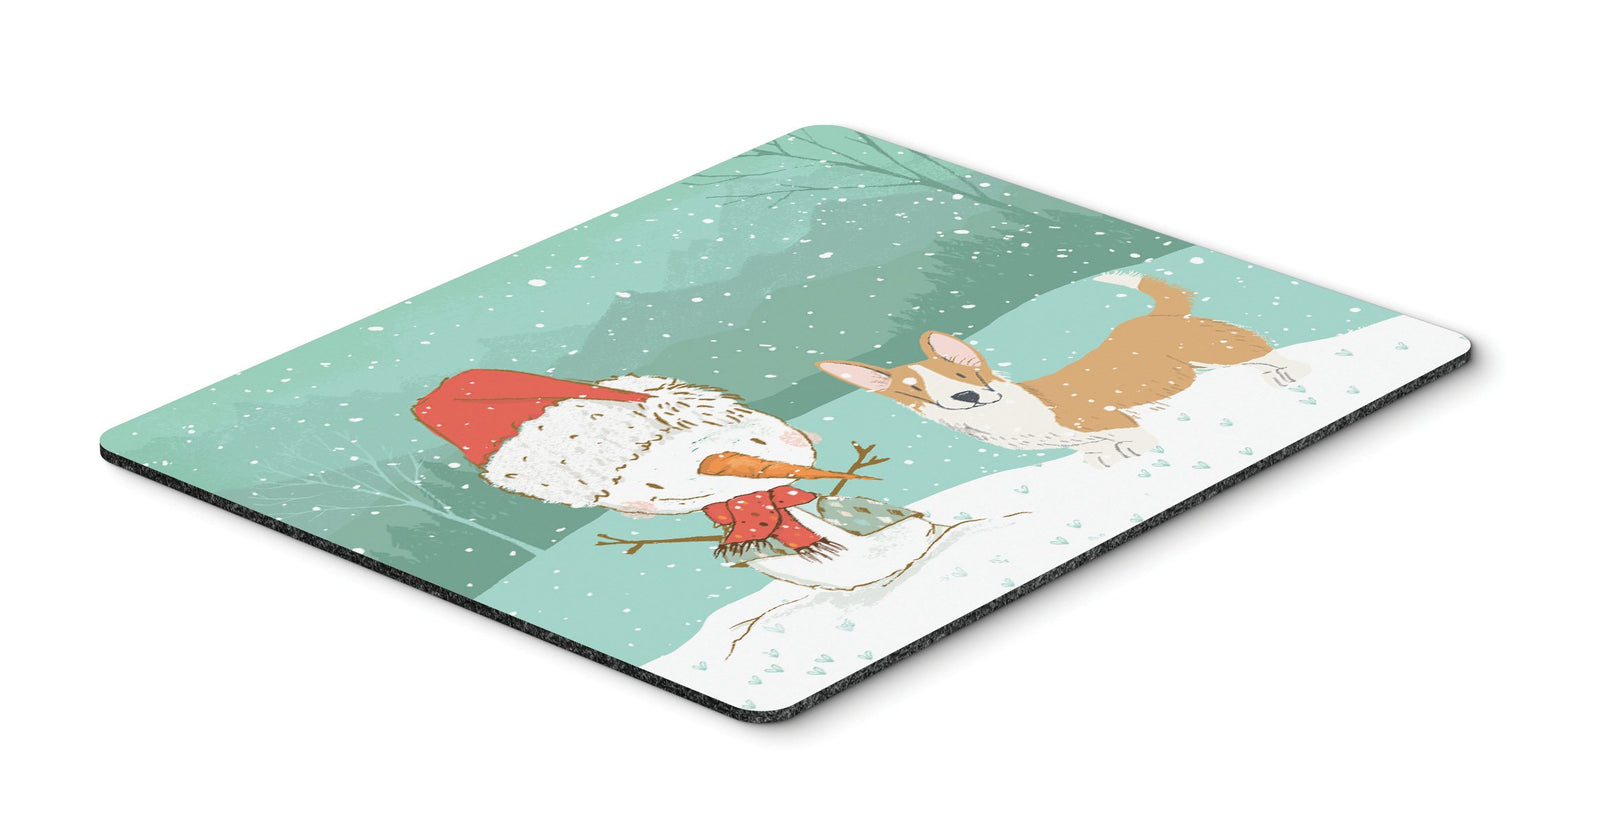 Cardigan Corgi Snowman Christmas Mouse Pad, Hot Pad or Trivet CK2063MP by Caroline's Treasures